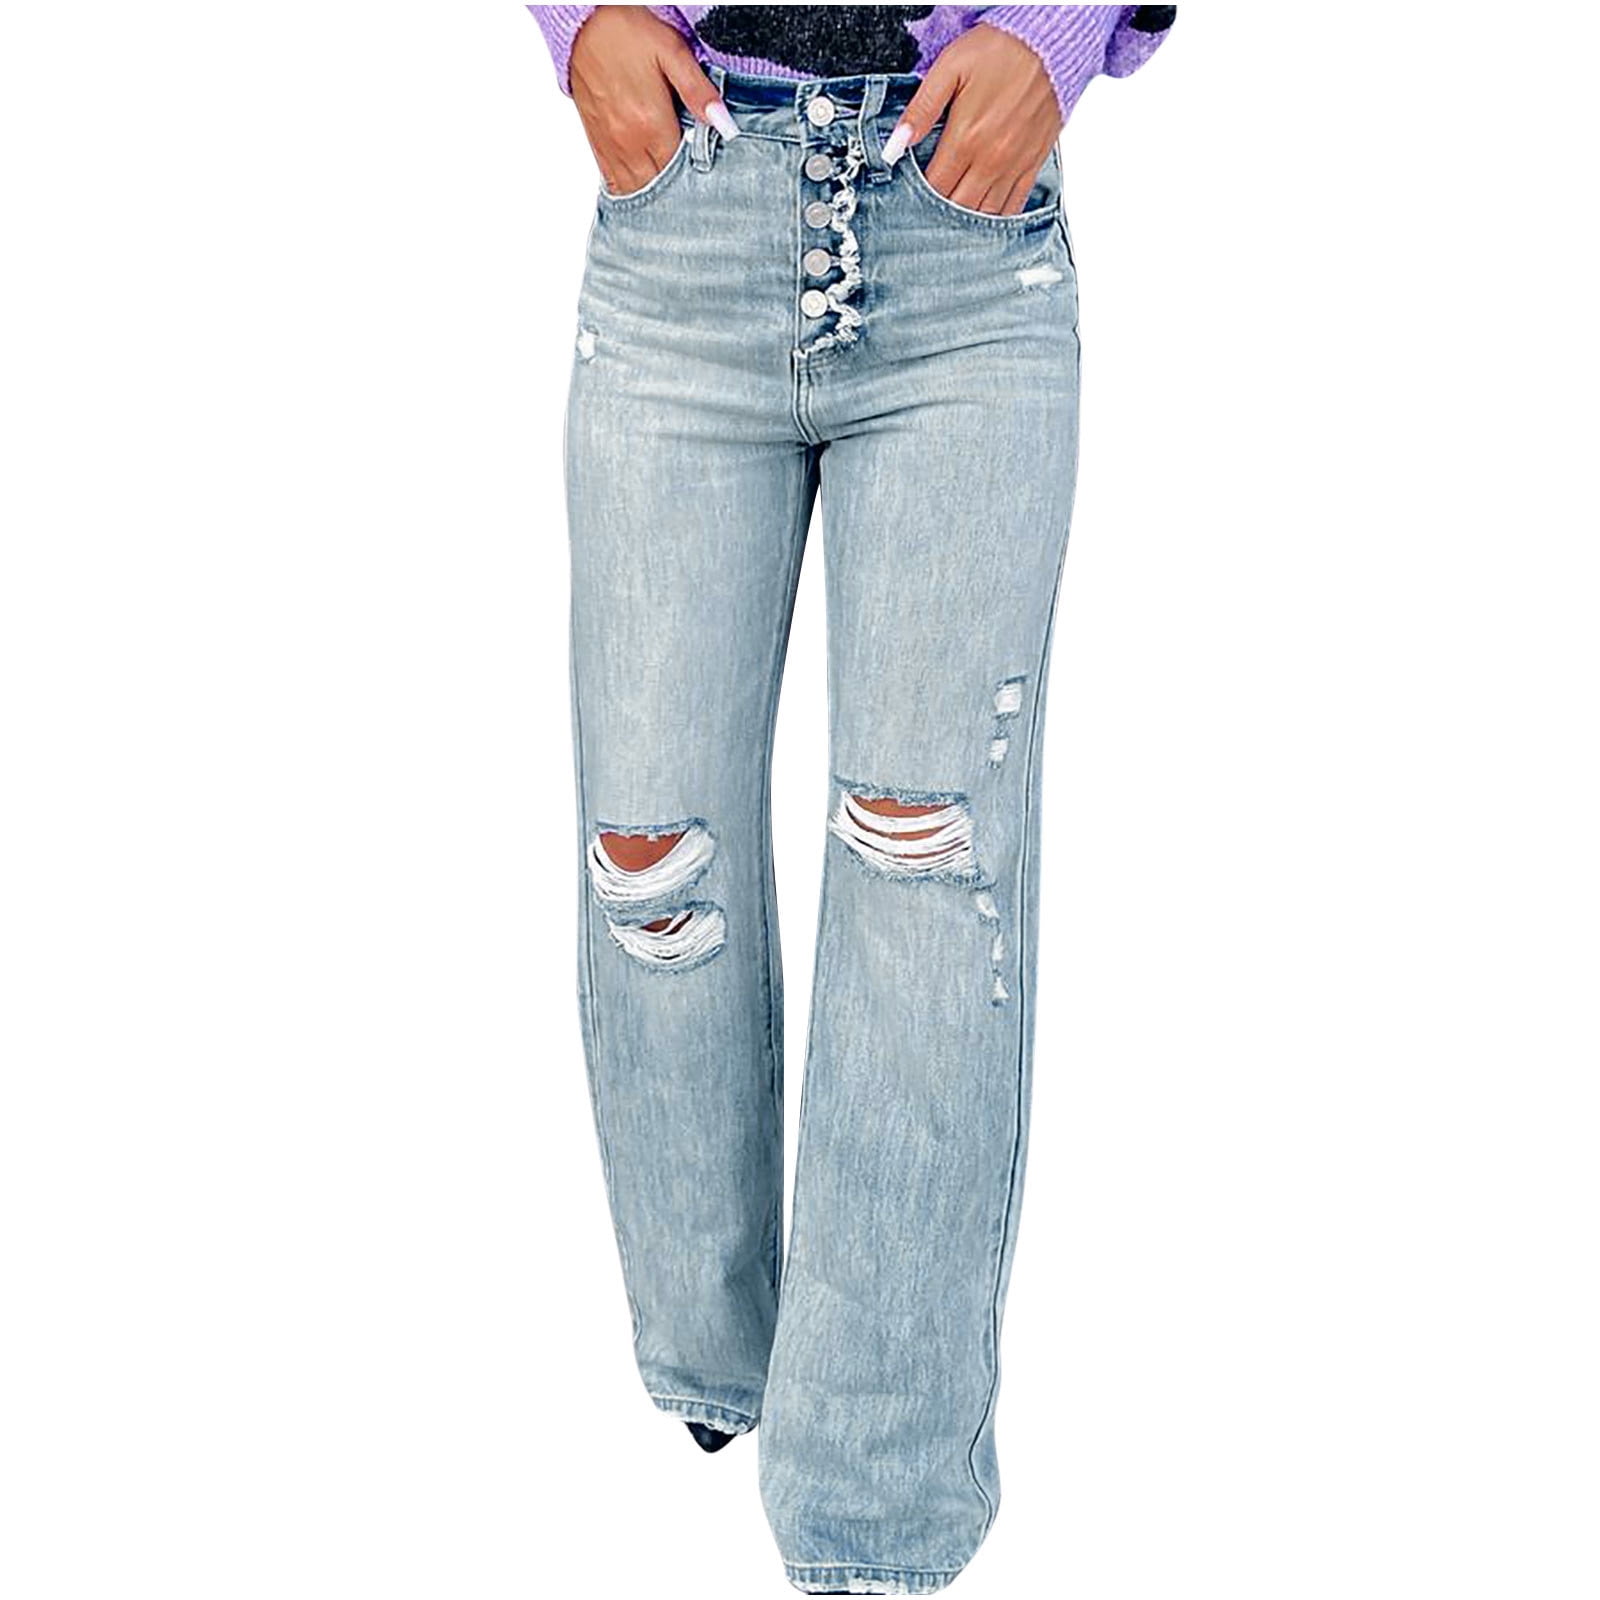 Women's Frayed Hem Ripped Jeans Fashion Breasted High-waisted Leg Flared Denim - Walmart.com